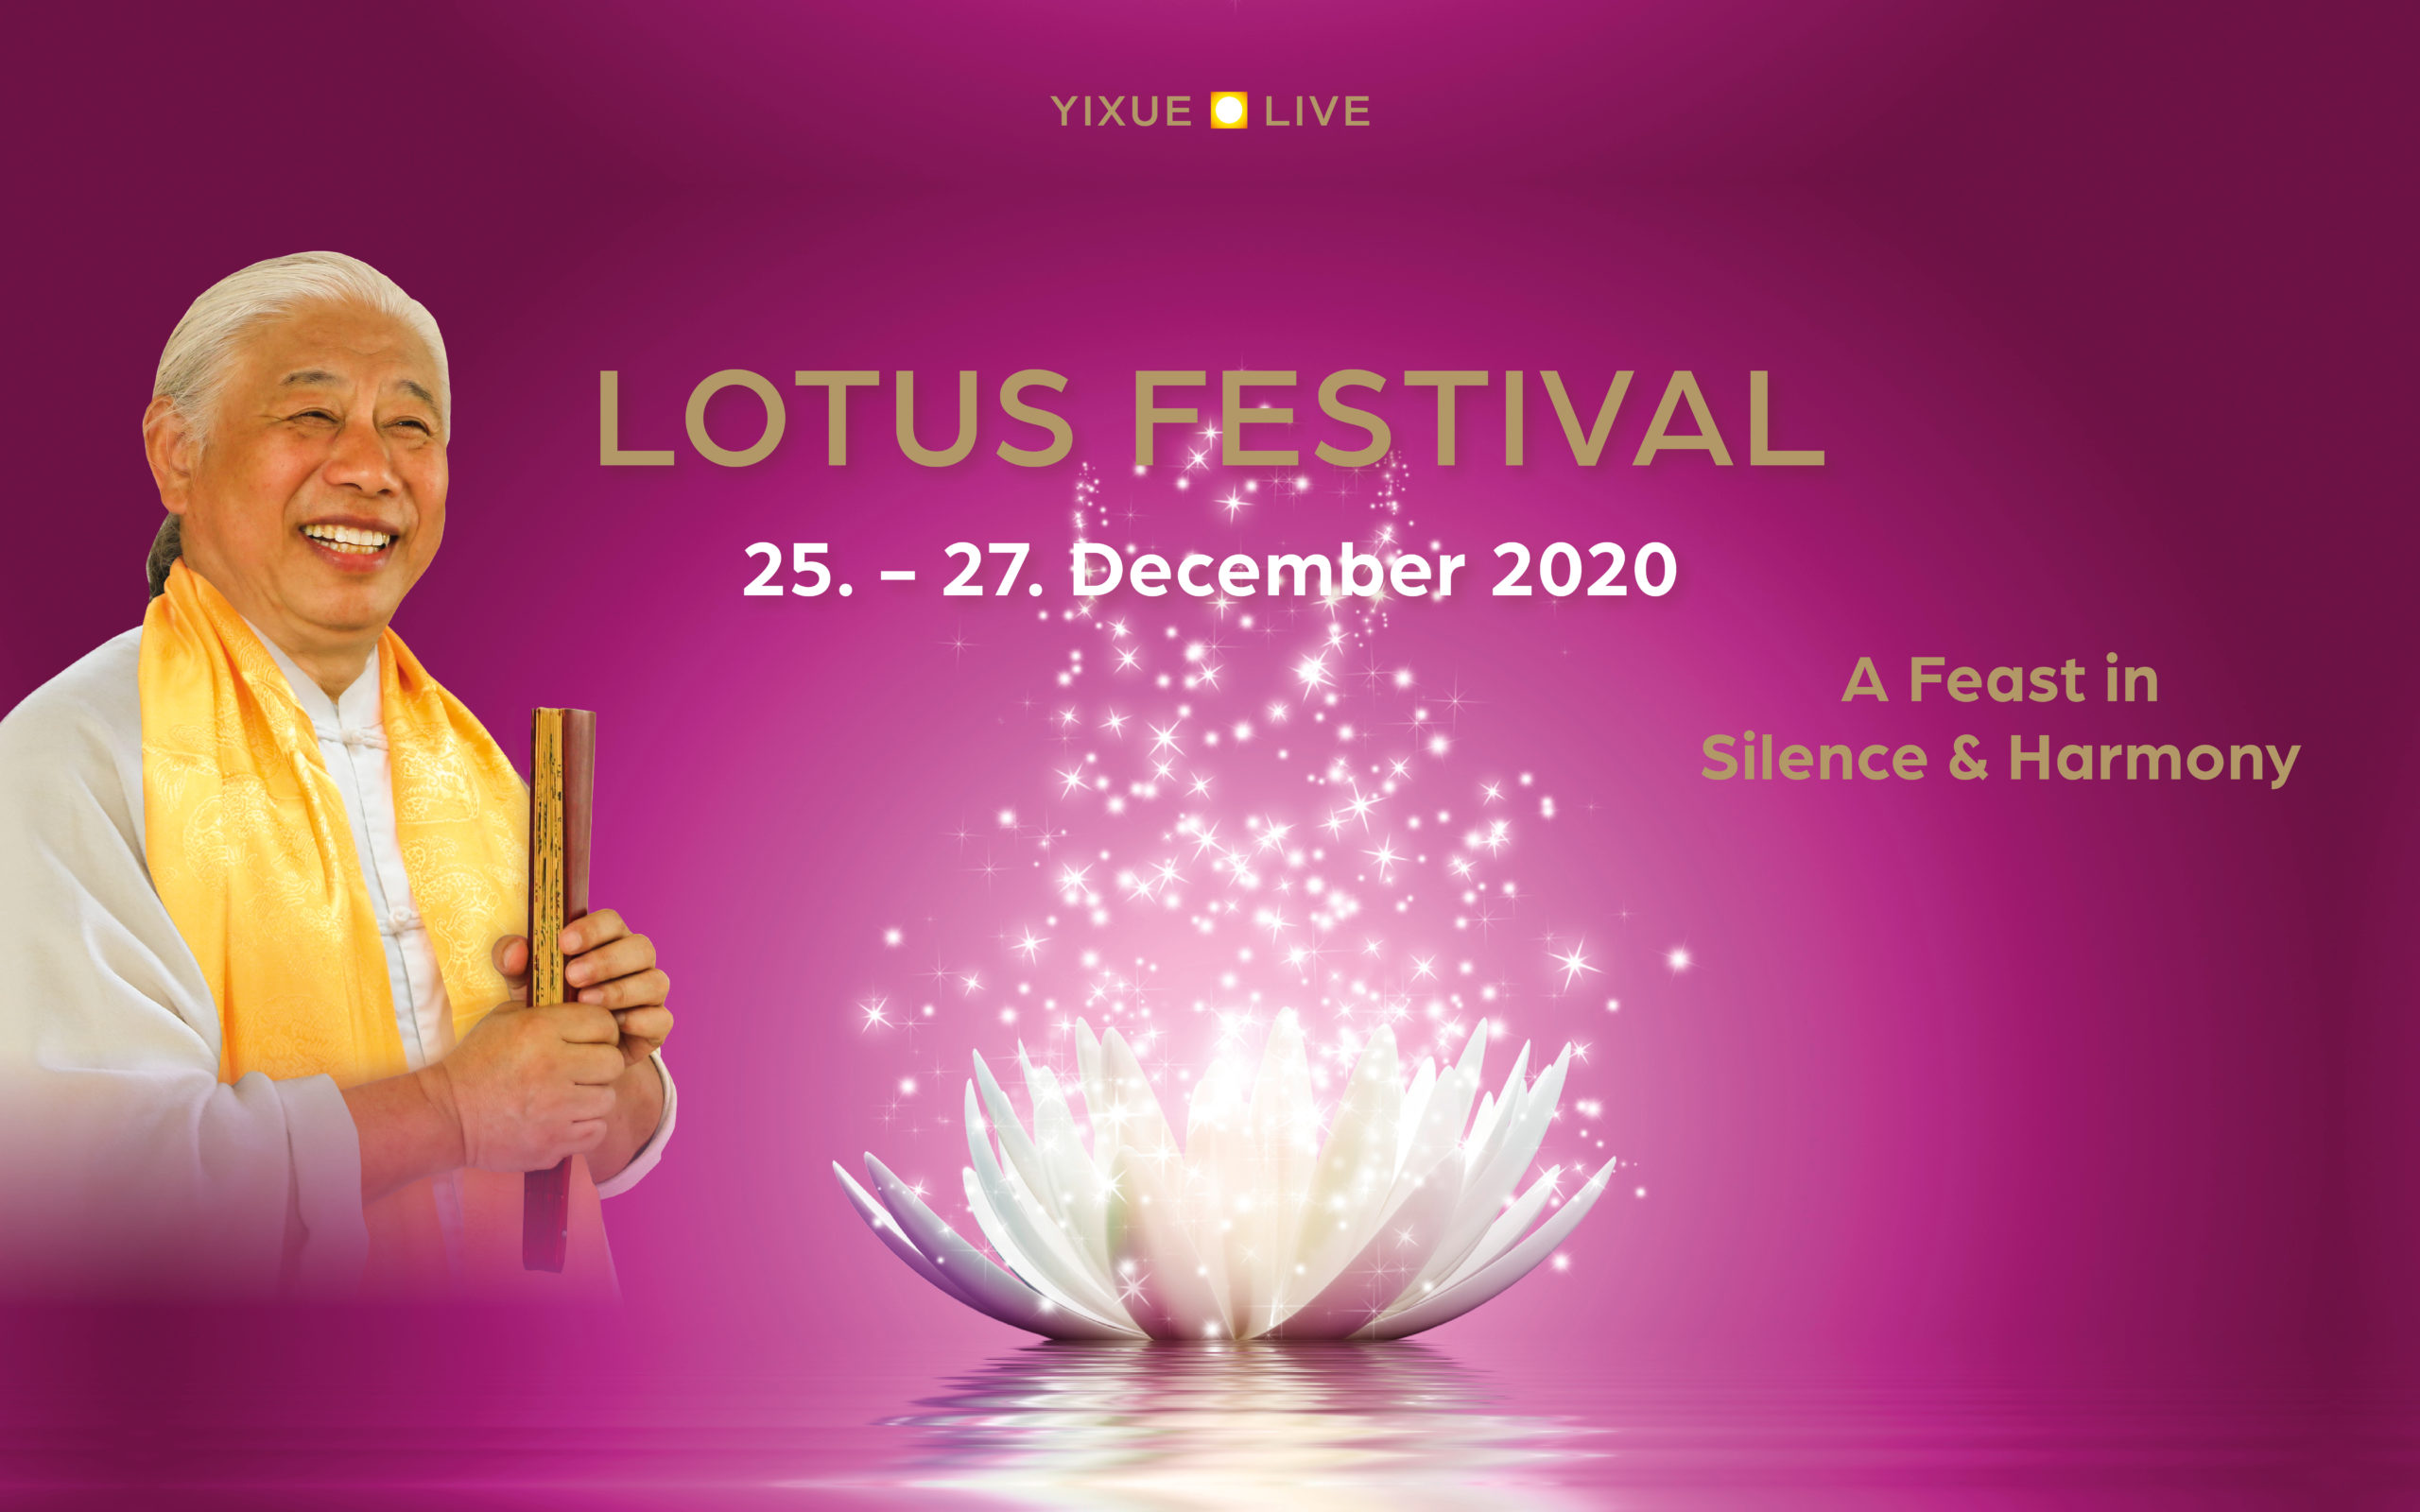 Lotus Festival 2020 yixue.de